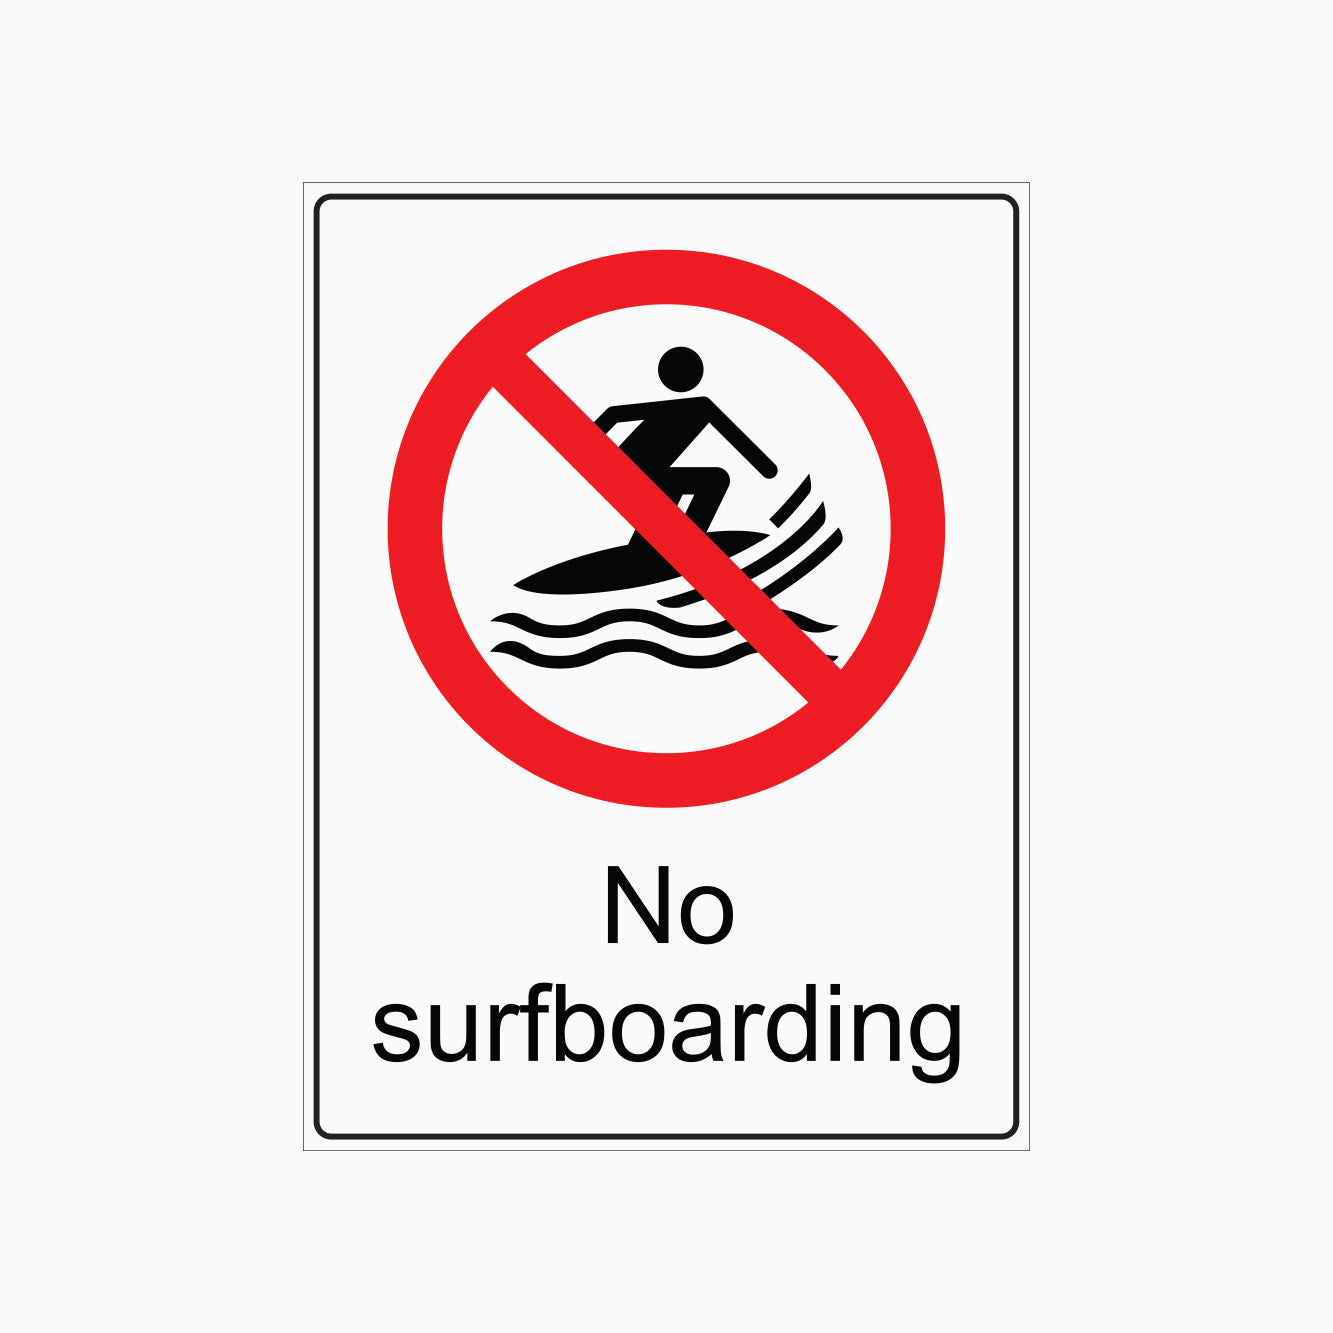 NO SURFBOARDING SIGN